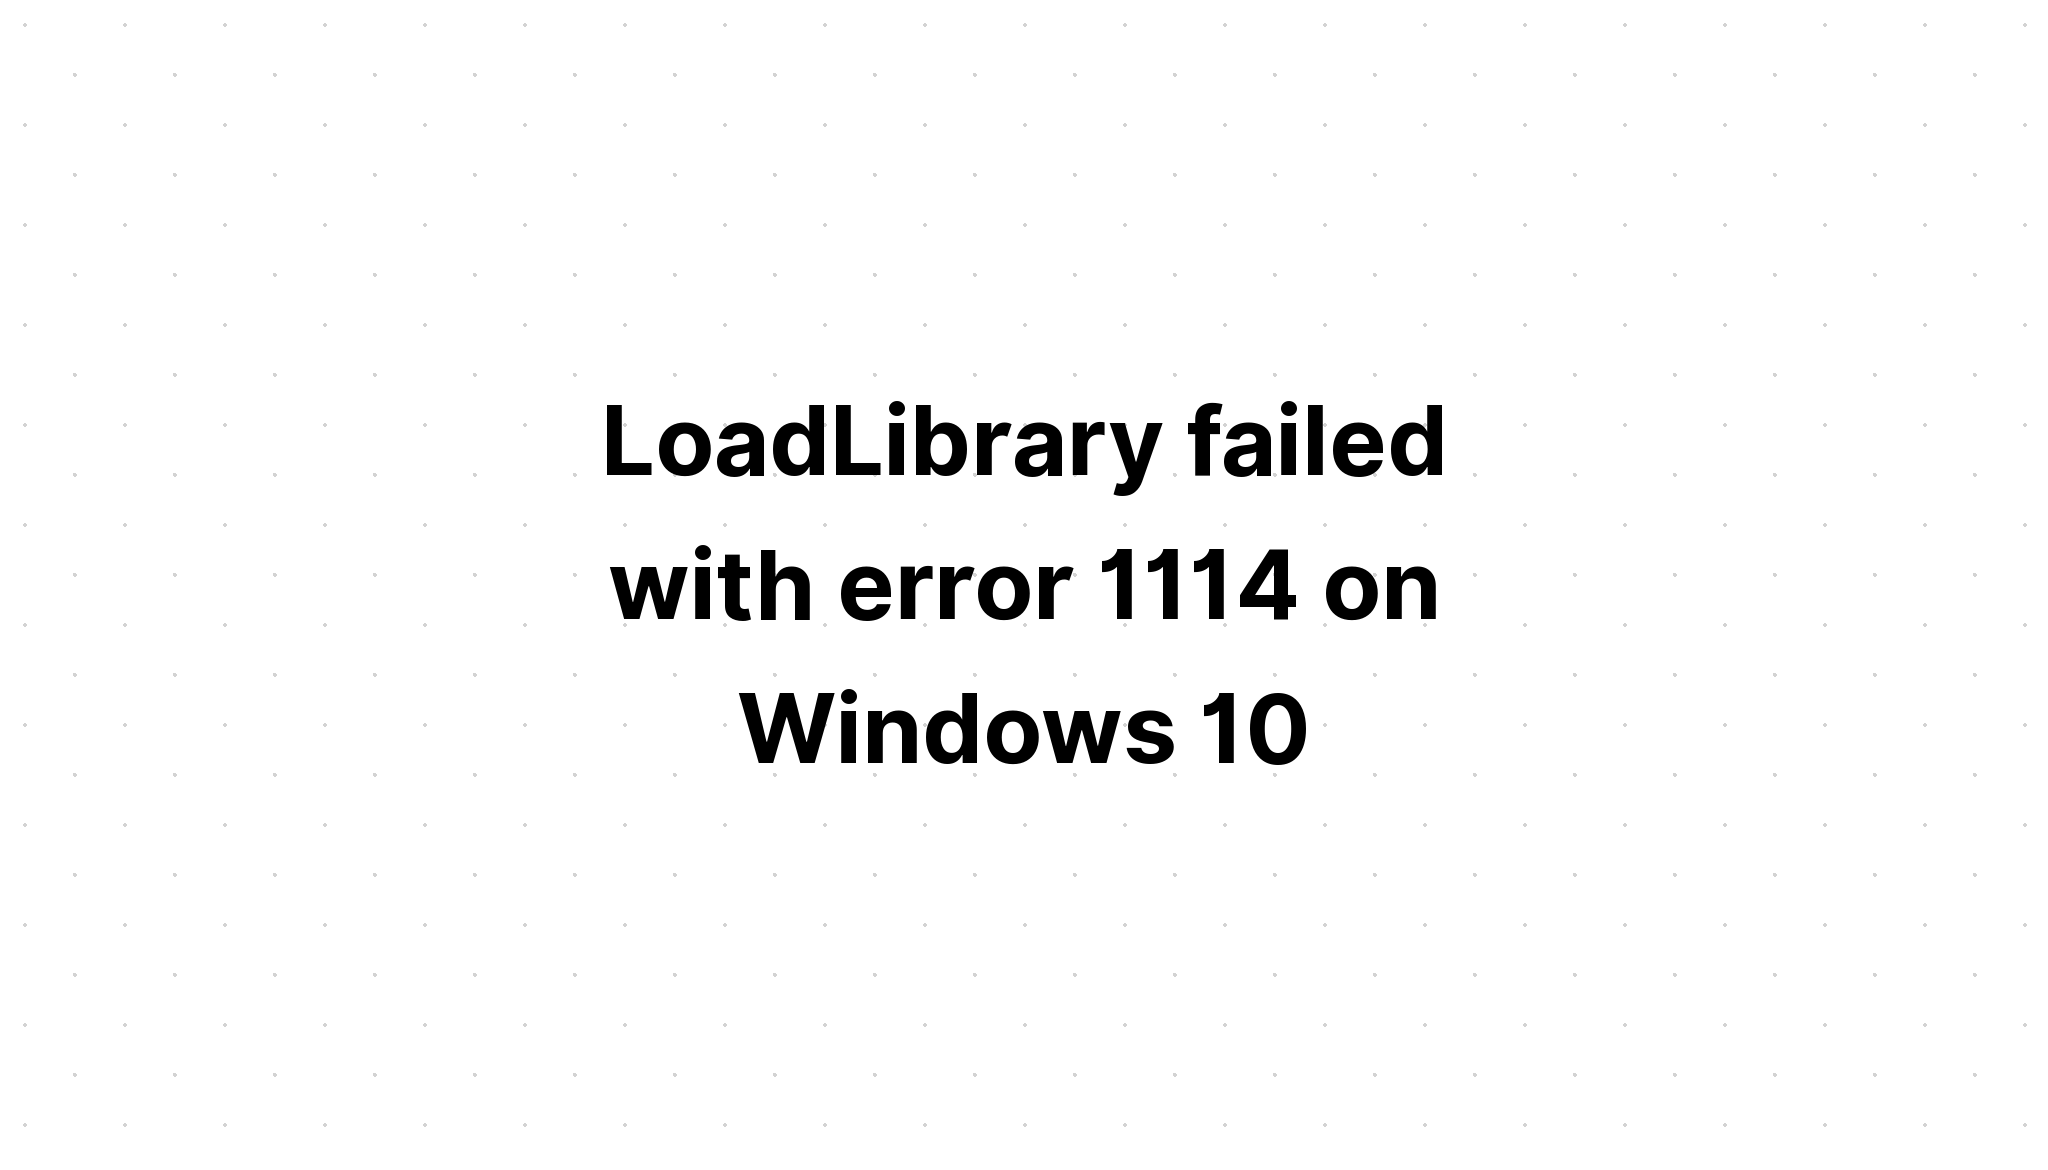 LOADLIBRARY failed with Error 1114 Windows 10 произошел сбой.